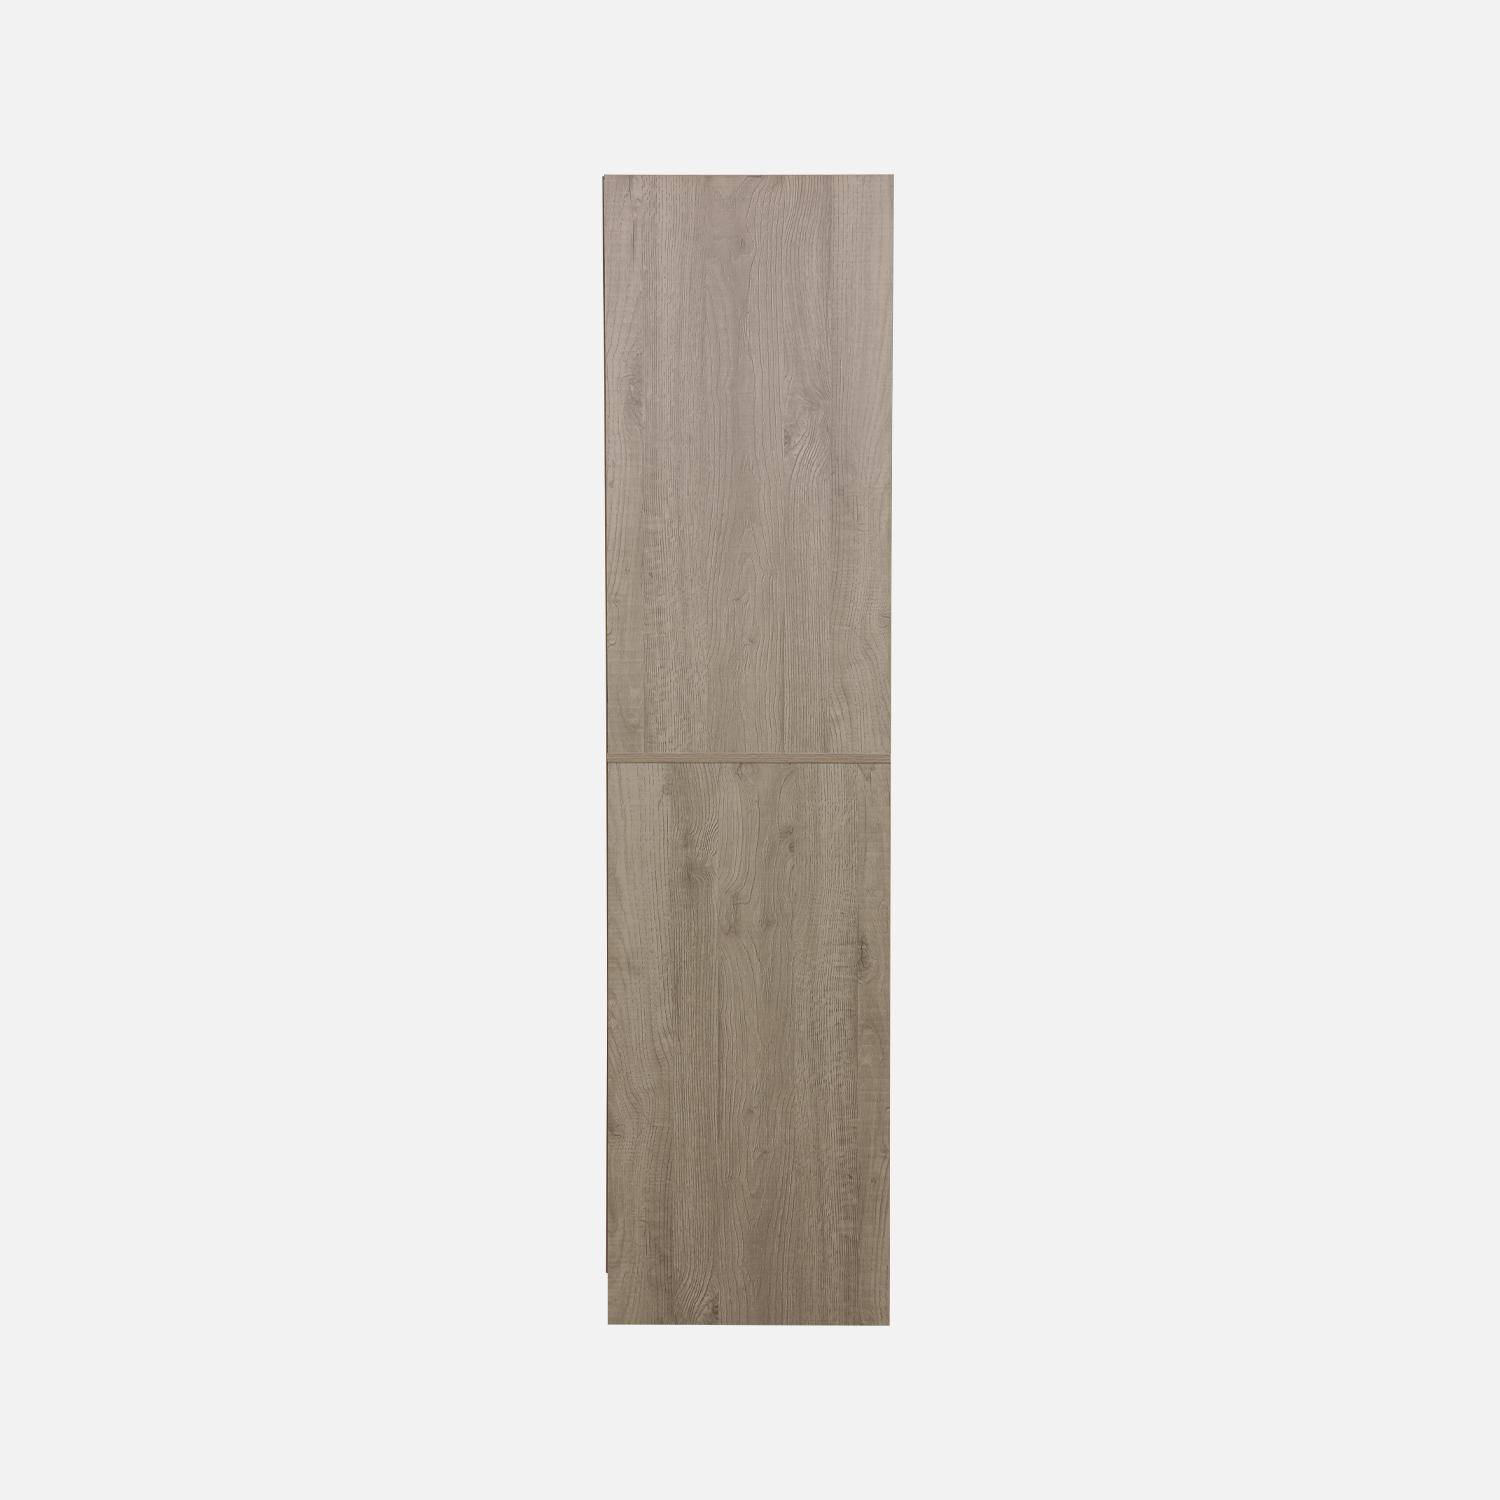 Kastenset, naturelhout kleurig, laminaat panelen, Modulo, 260x45x180cm,sweeek,Photo7